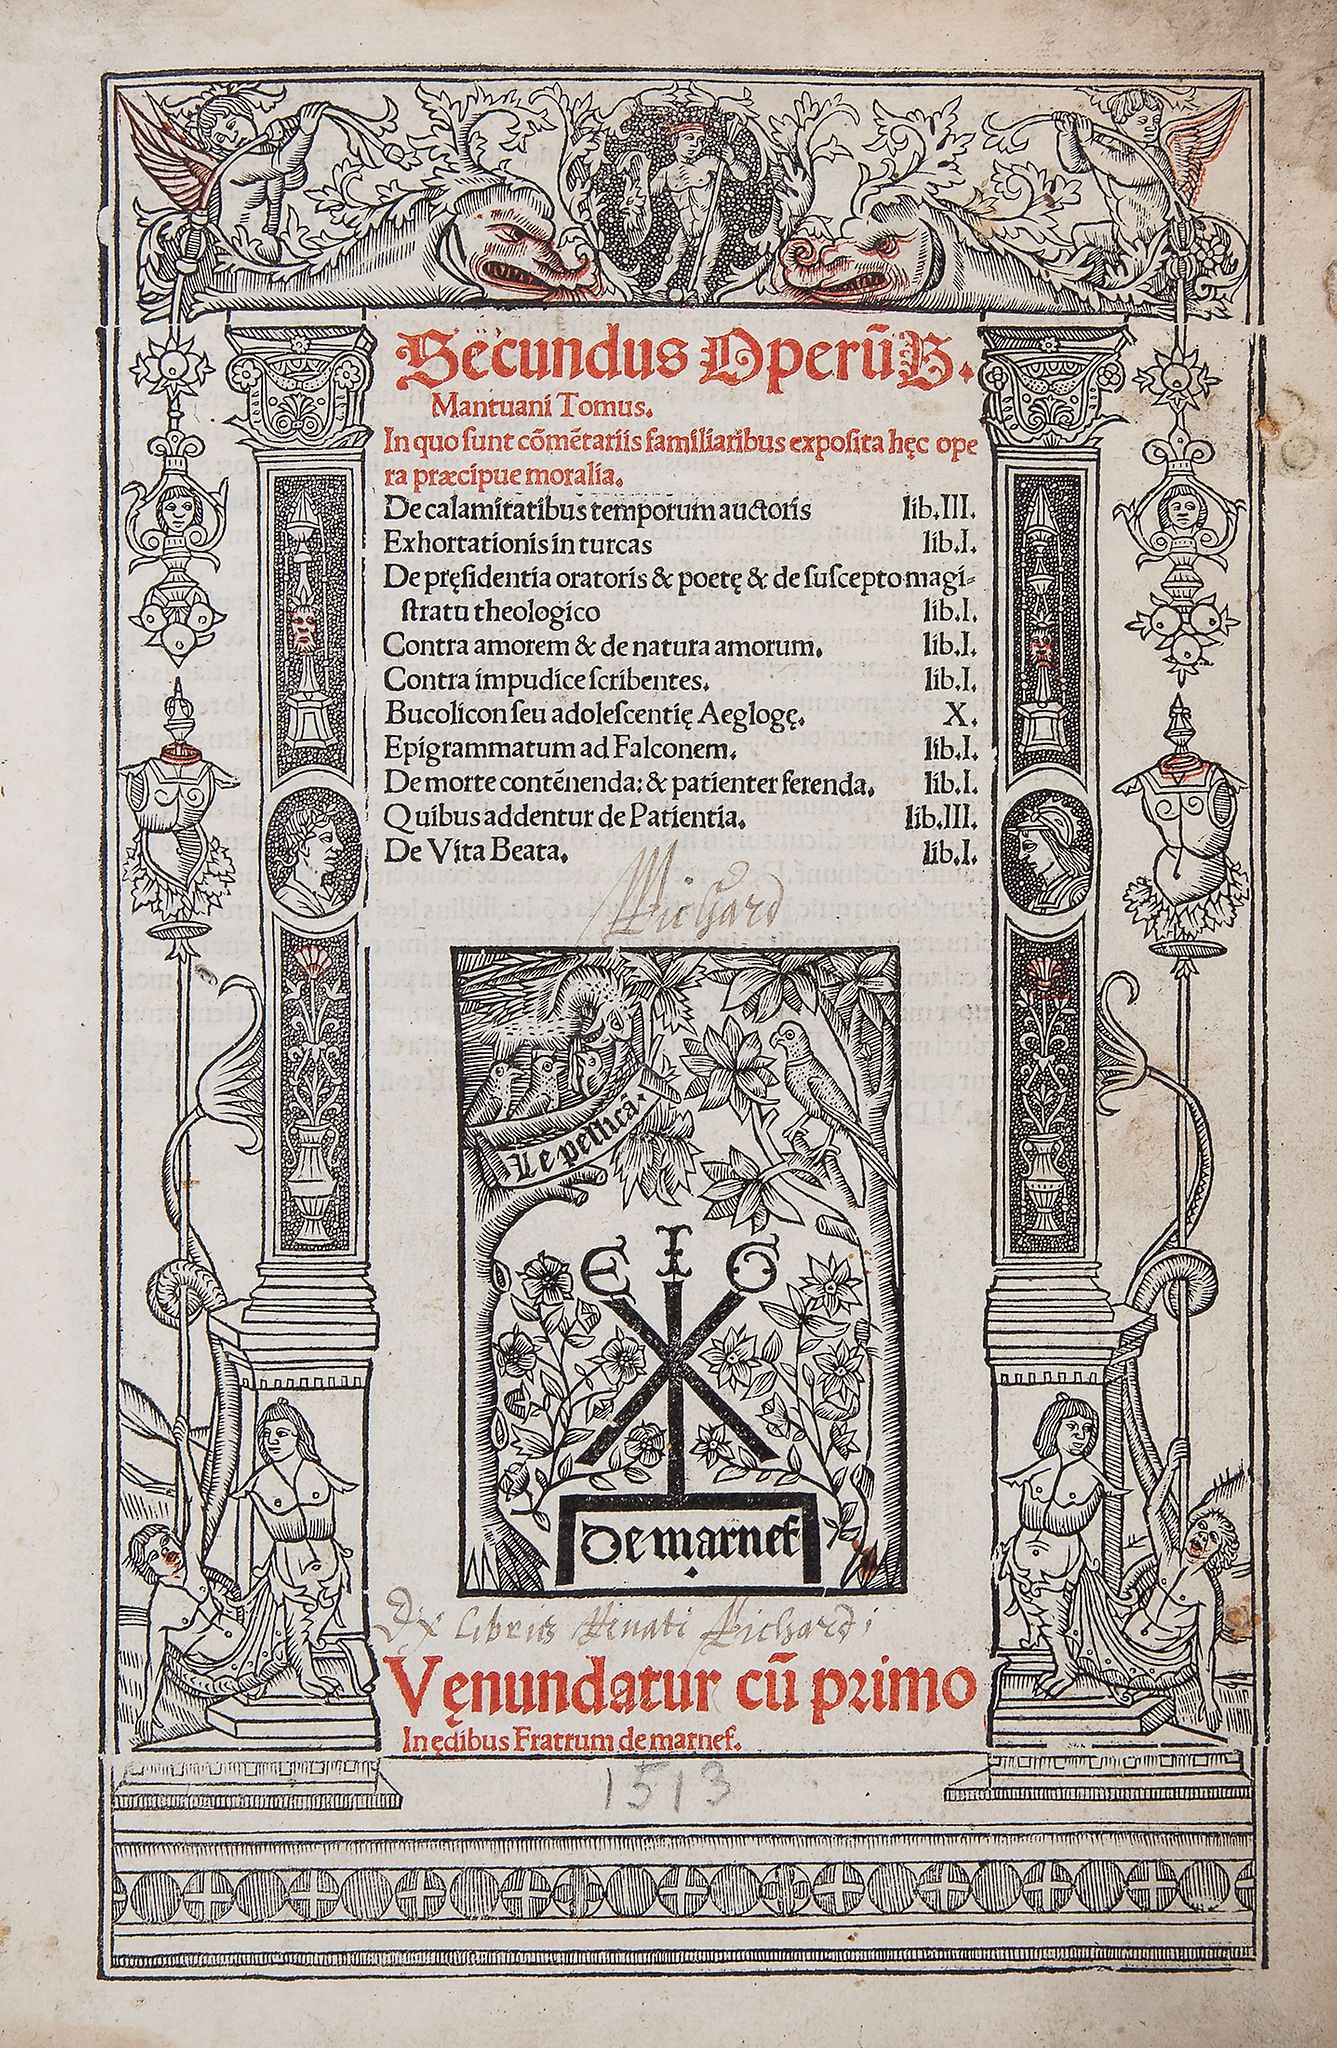 Baptista Mantuanus. - Secundus Operu[m] B. Mantuani Tomus,  vol. 2 only, of 3, 2 parts in 1